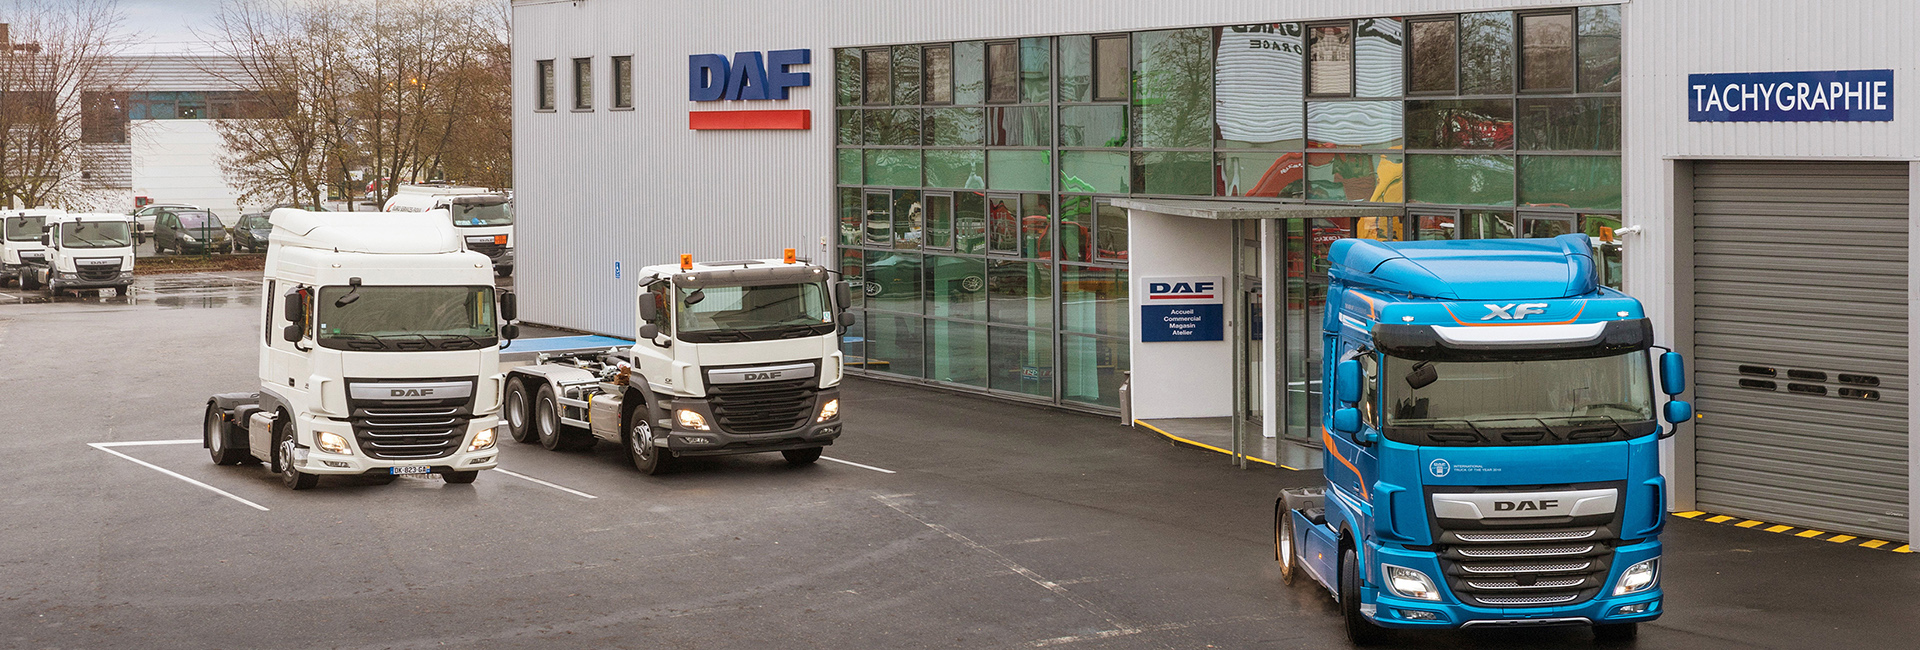 DAF opens Paris dealership premises